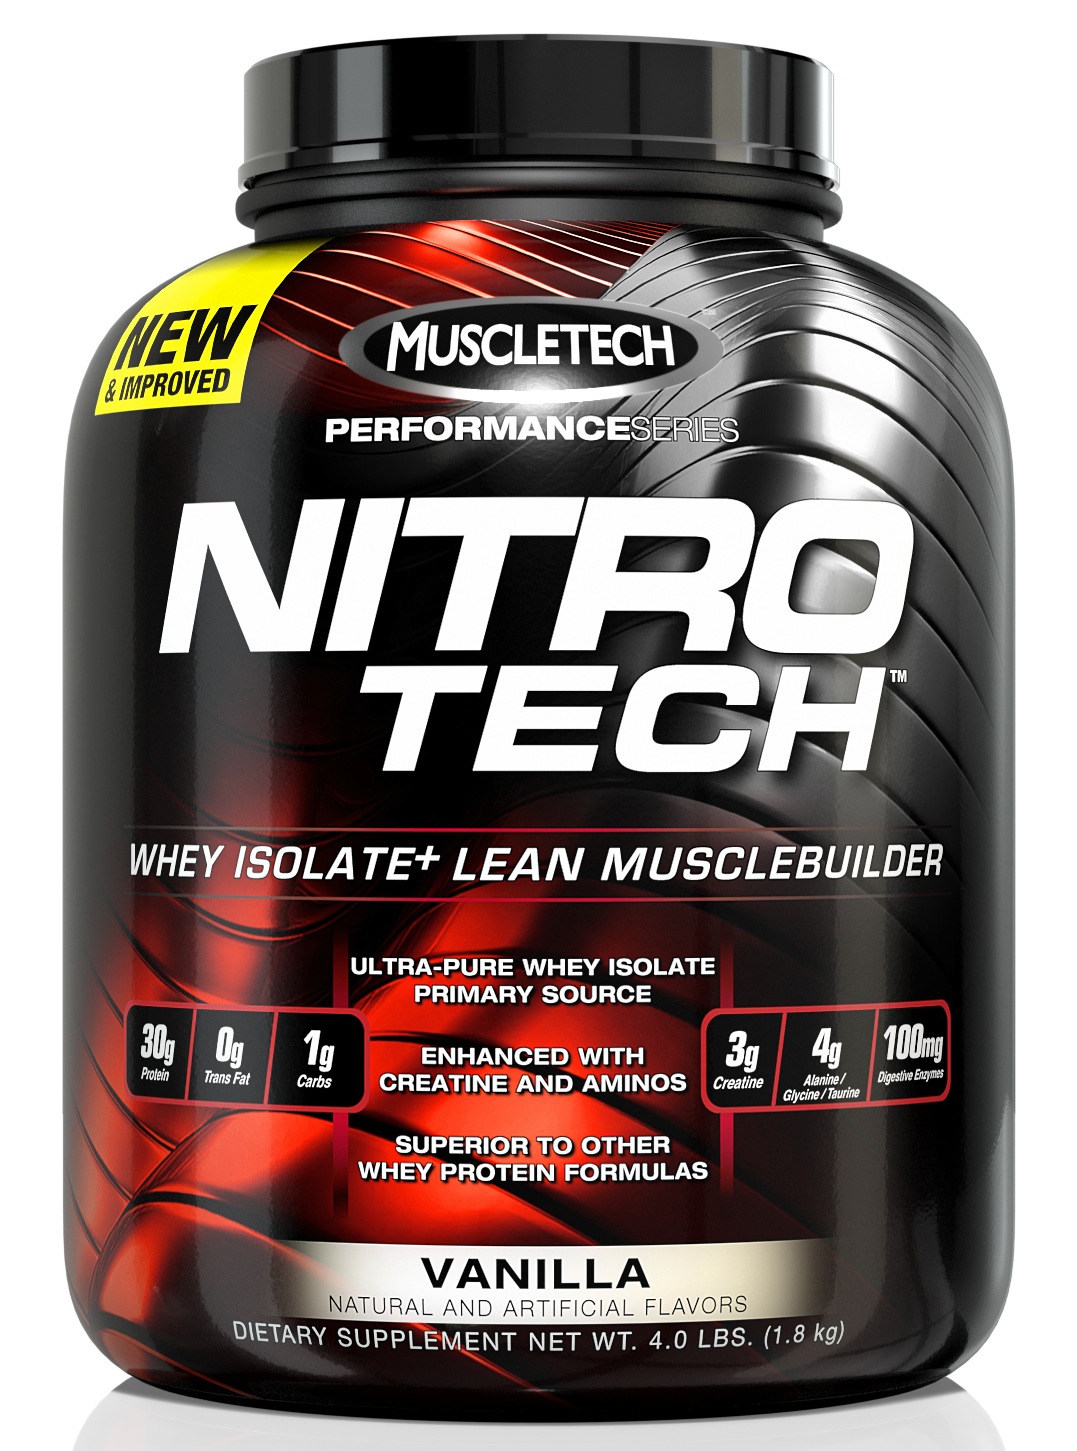 Купить протеин в минске. MUSCLETECH Nitro Tech 1.8kg. Muscletechniyto Tech Whey Protein протеин 1.8. Nitro Tech протеин 4.5 кг. MUSCLETECH Nitro Tech Price.